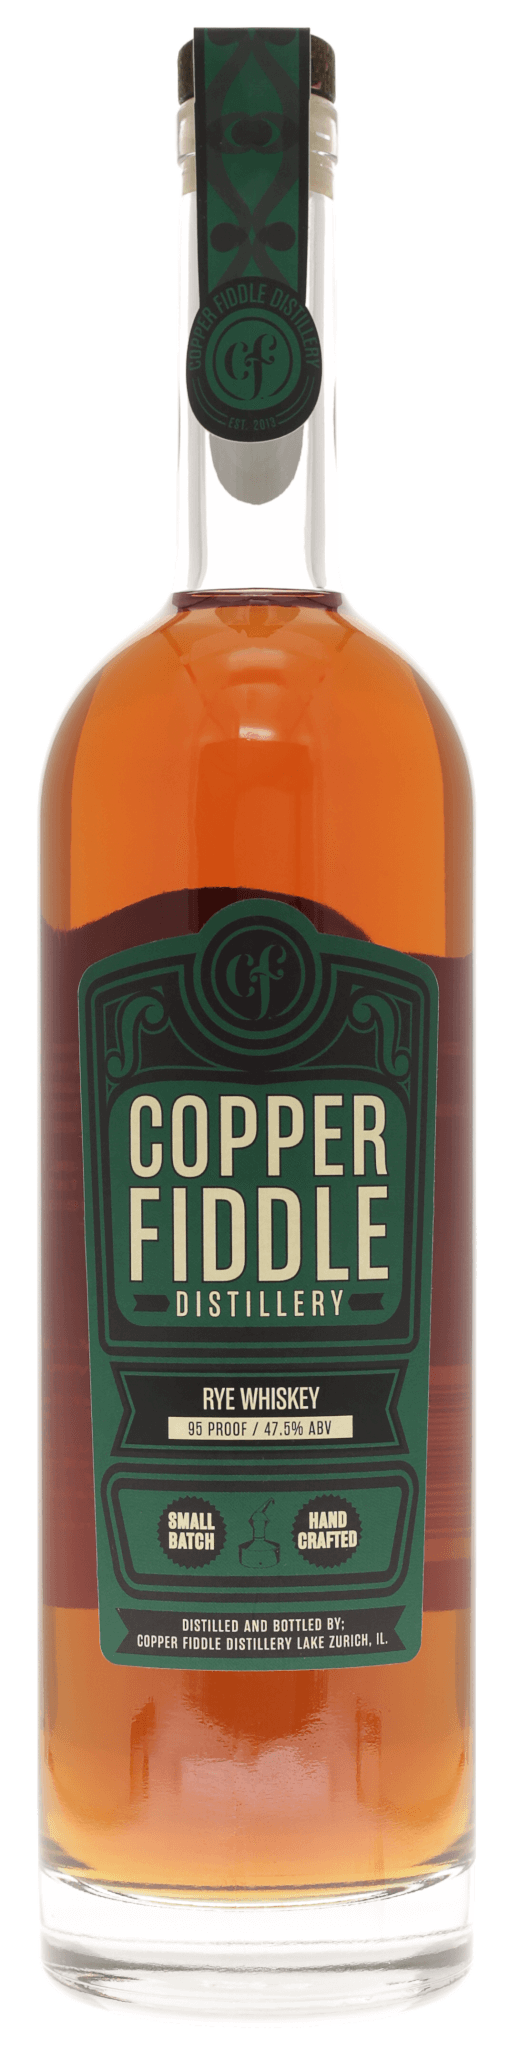 Copper Fiddle Rye Whiskey